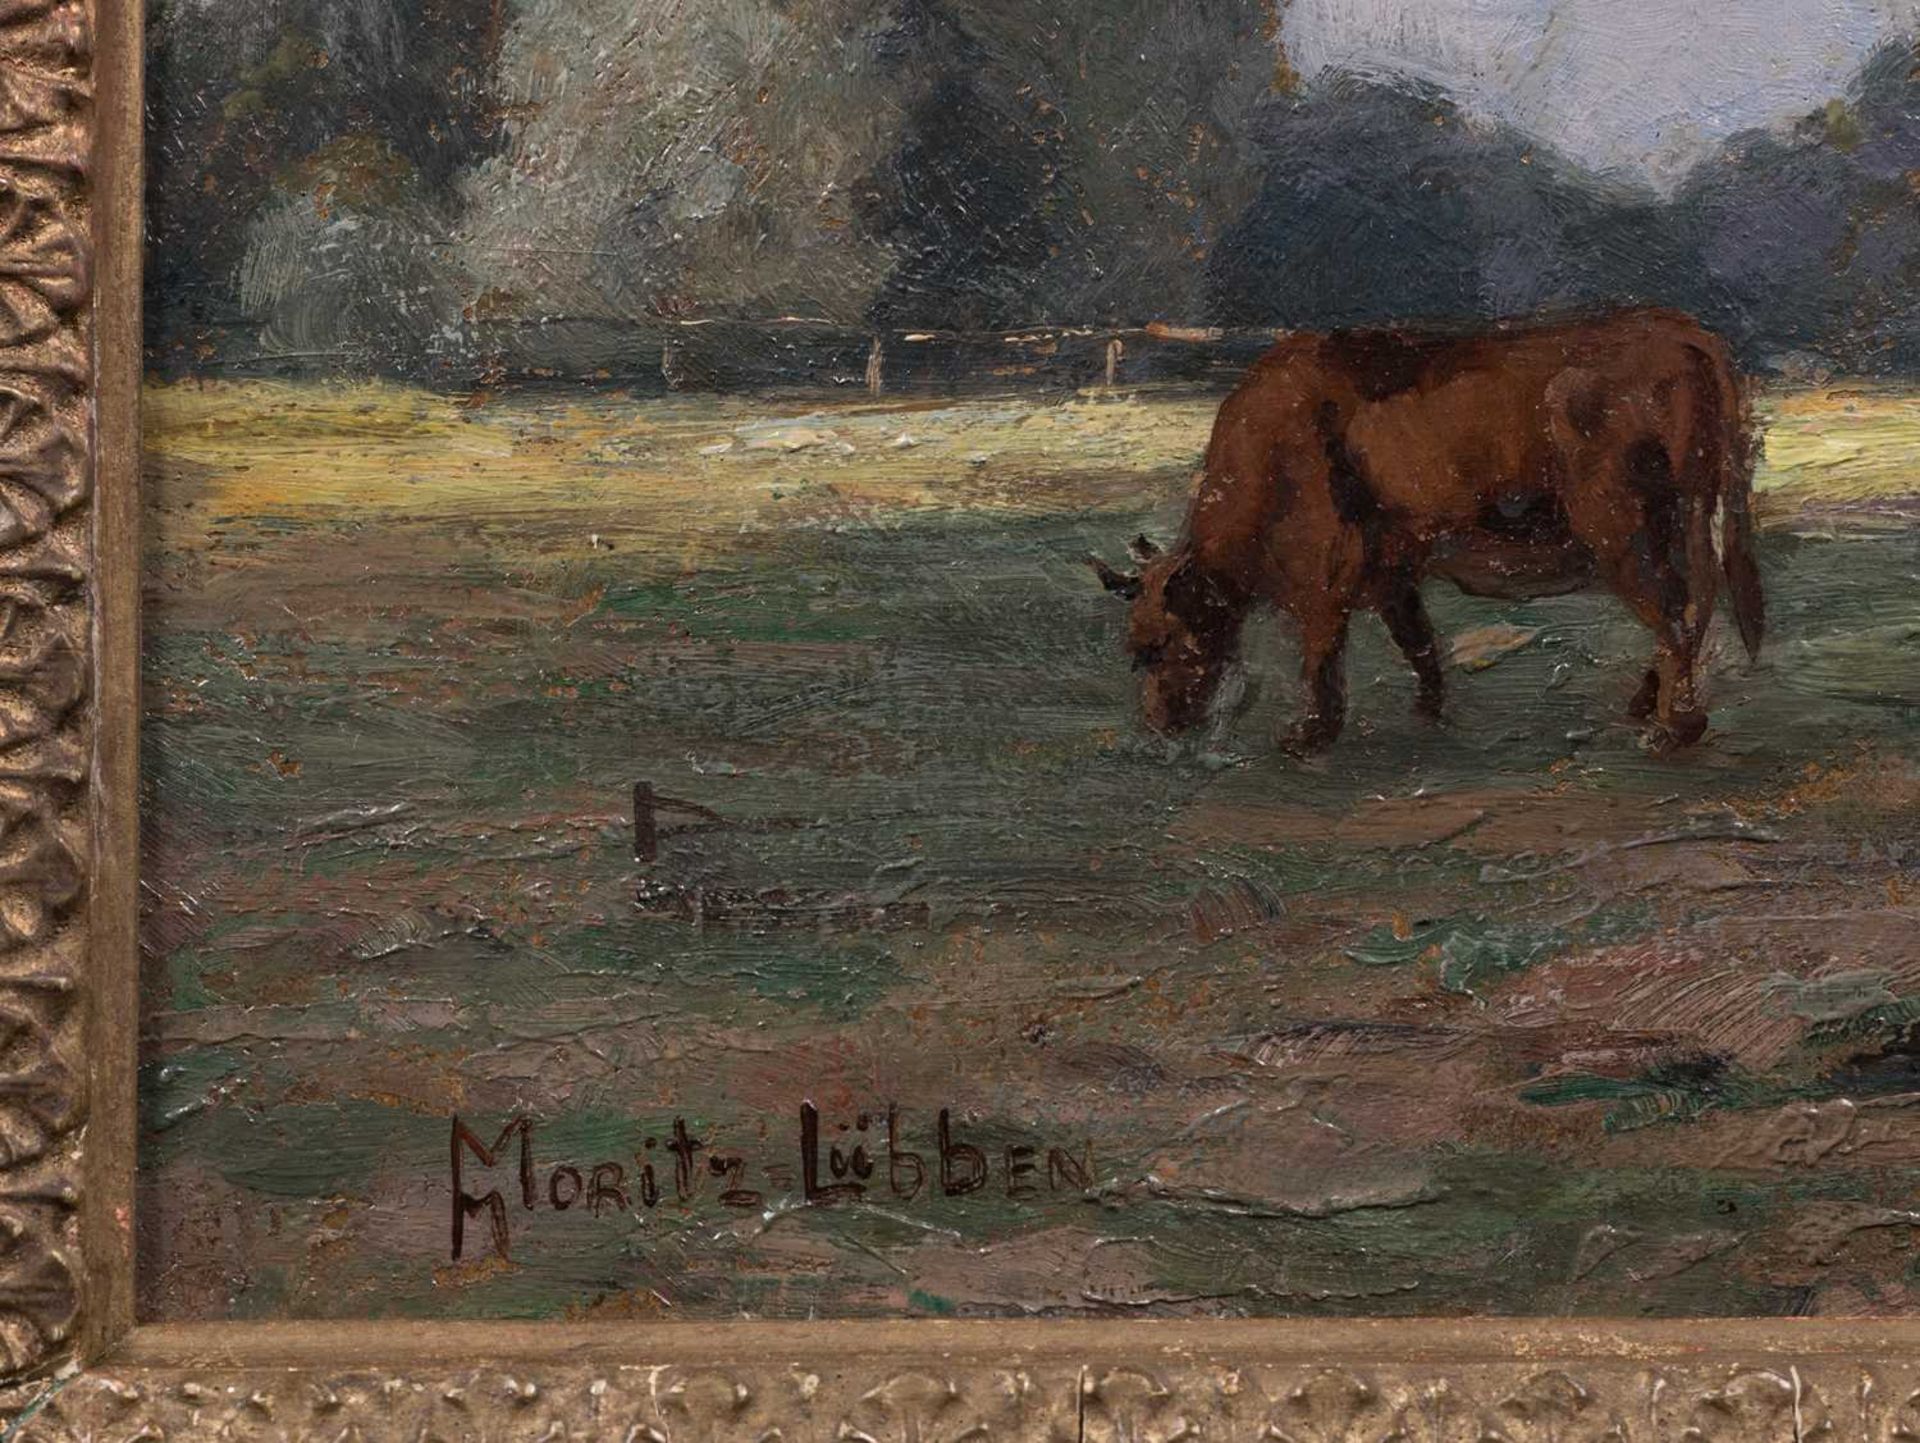 Marie Elisabeth Moritz (1860 - 1925 ) - "M.-Lübben" - Image 5 of 5